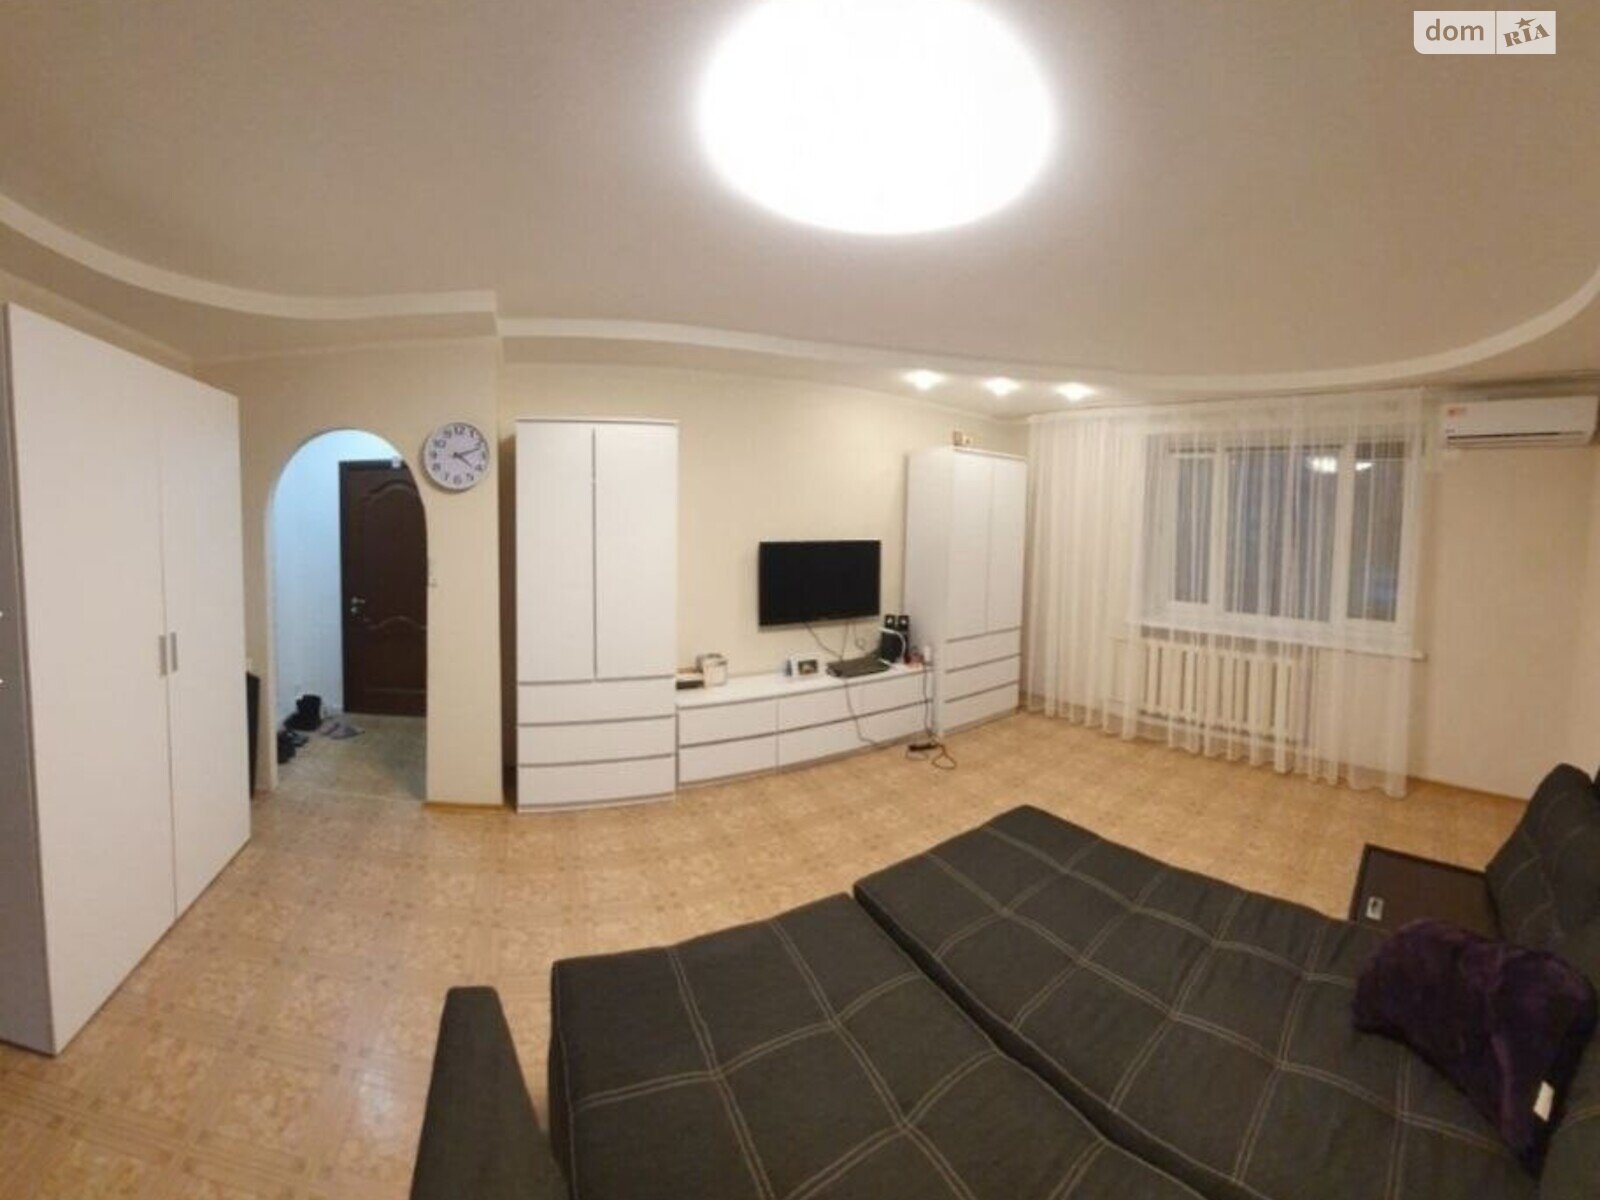 Продажа четырехкомнатной квартиры в Днепре, на ул. Немировича-Данченко, район Самарский фото 1